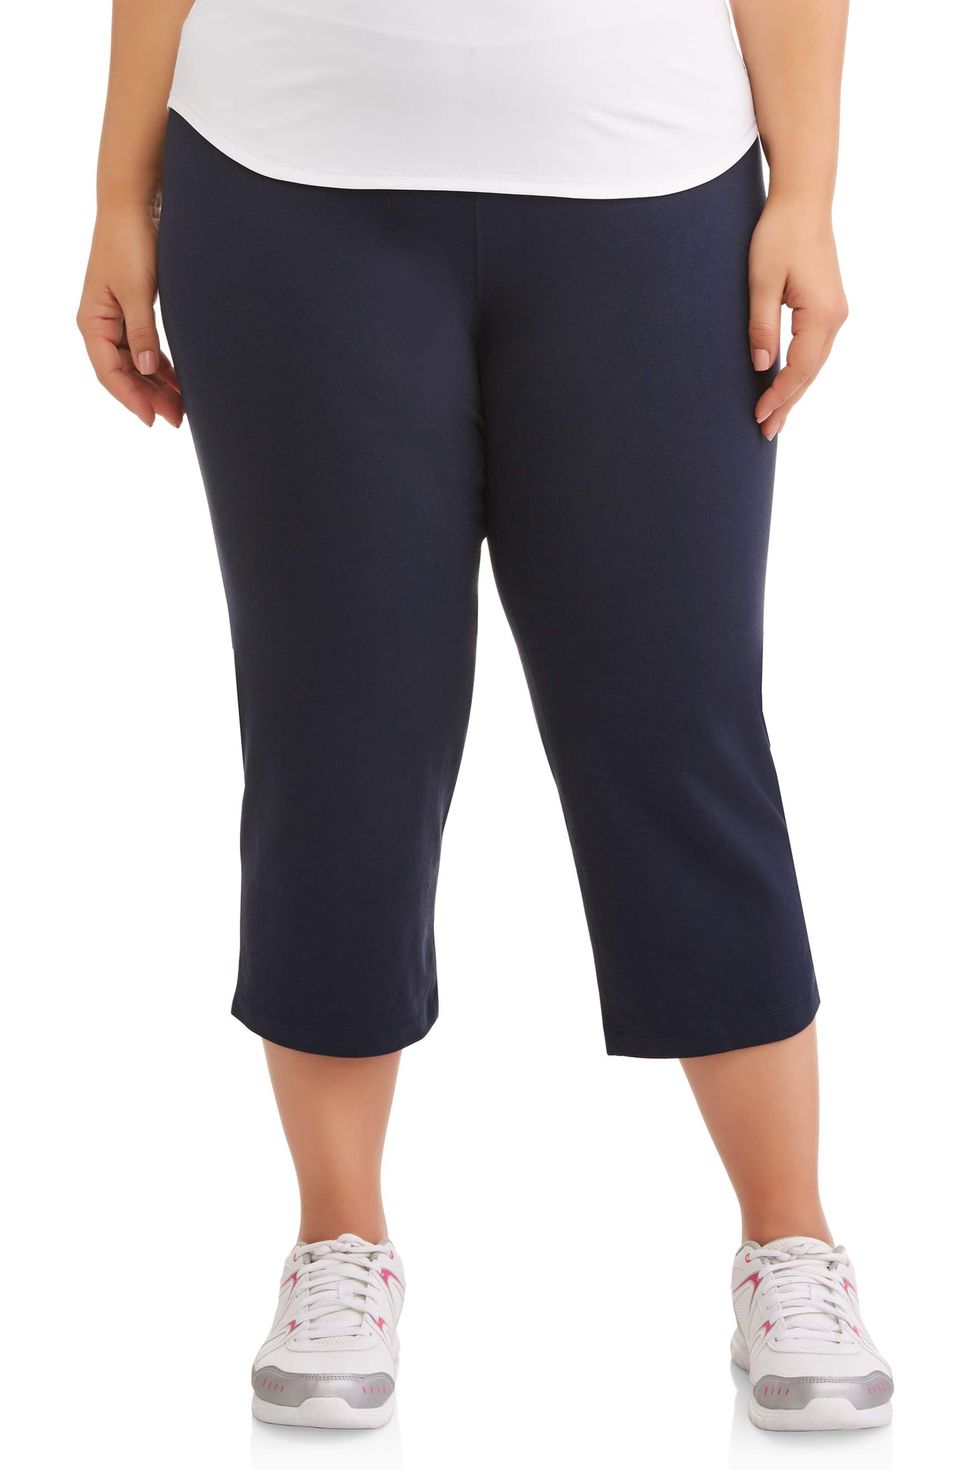 Athletic Works Women's Bootcut Fit Dri-More Core Cotton Blend Yoga Pants  Availab